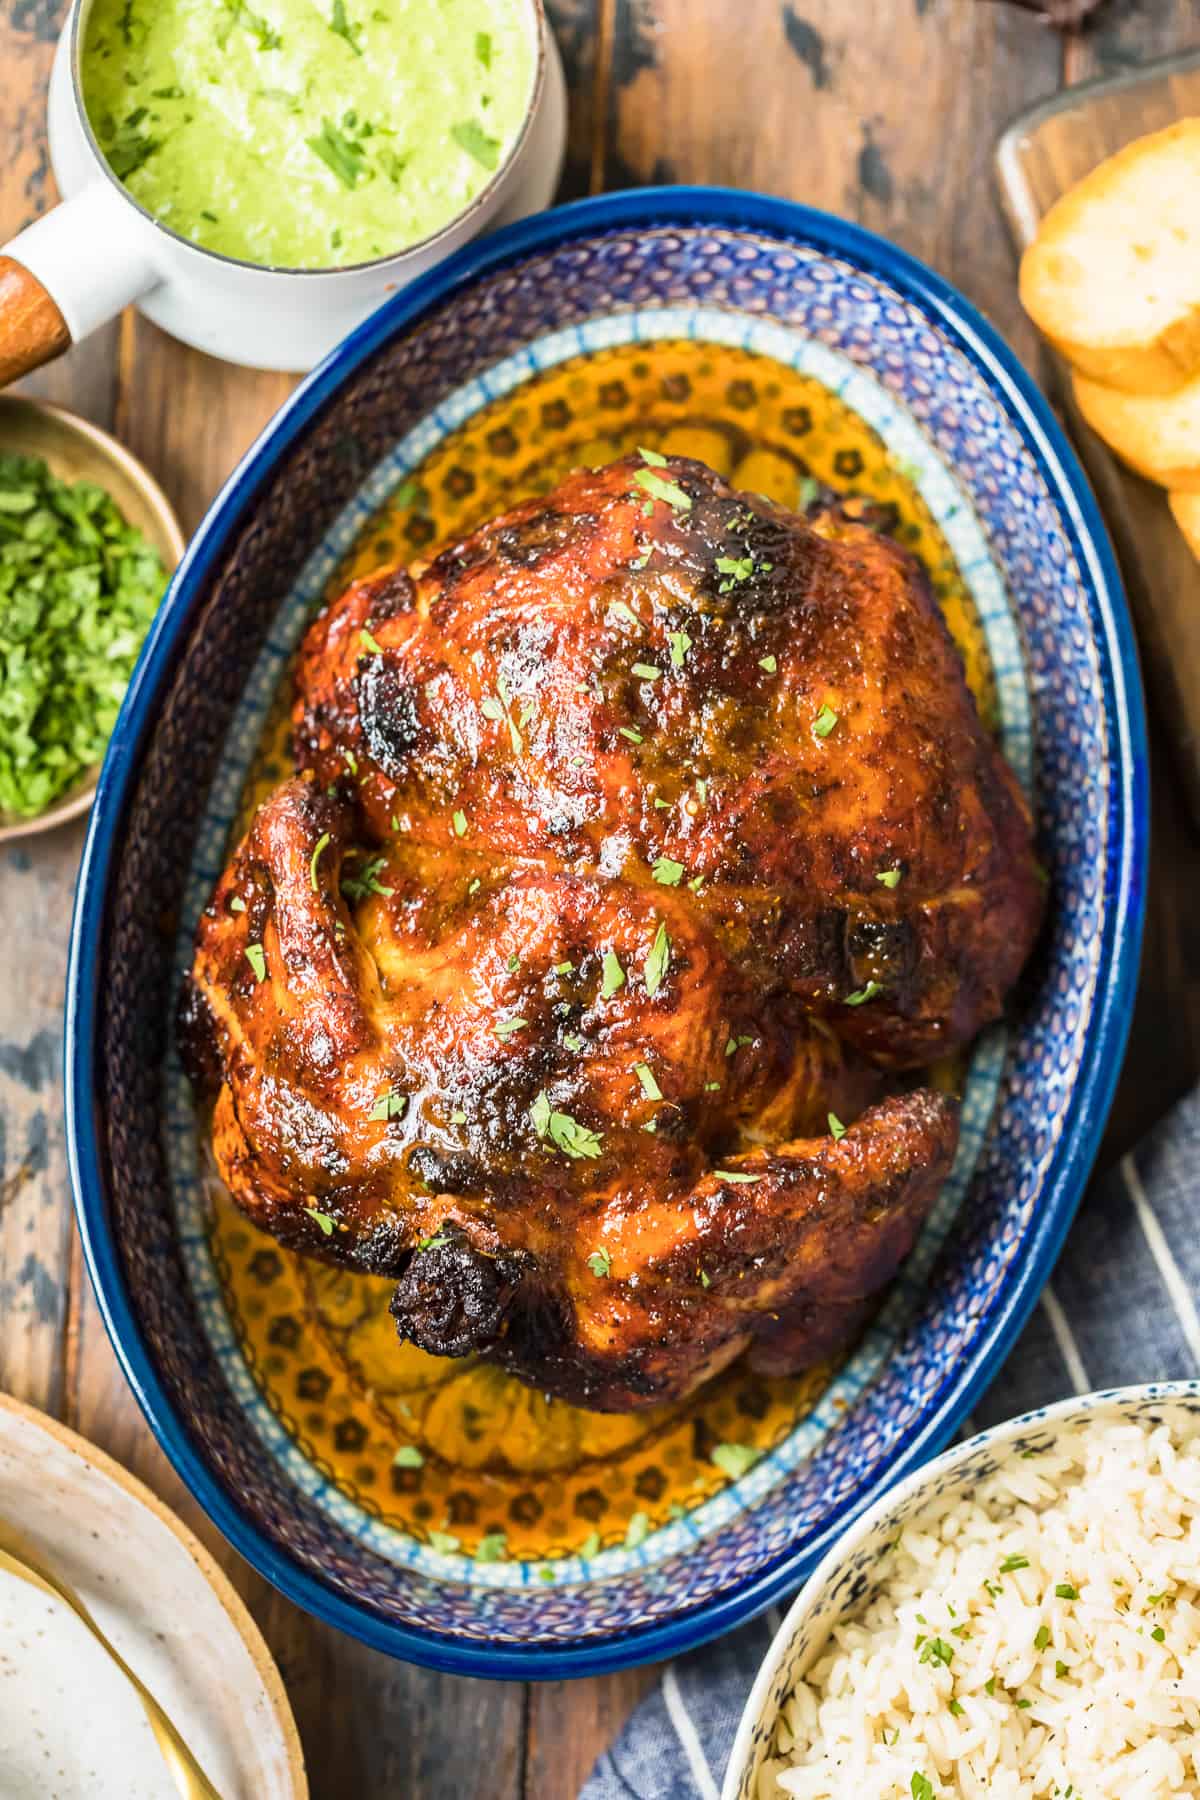 roast chicken on plate